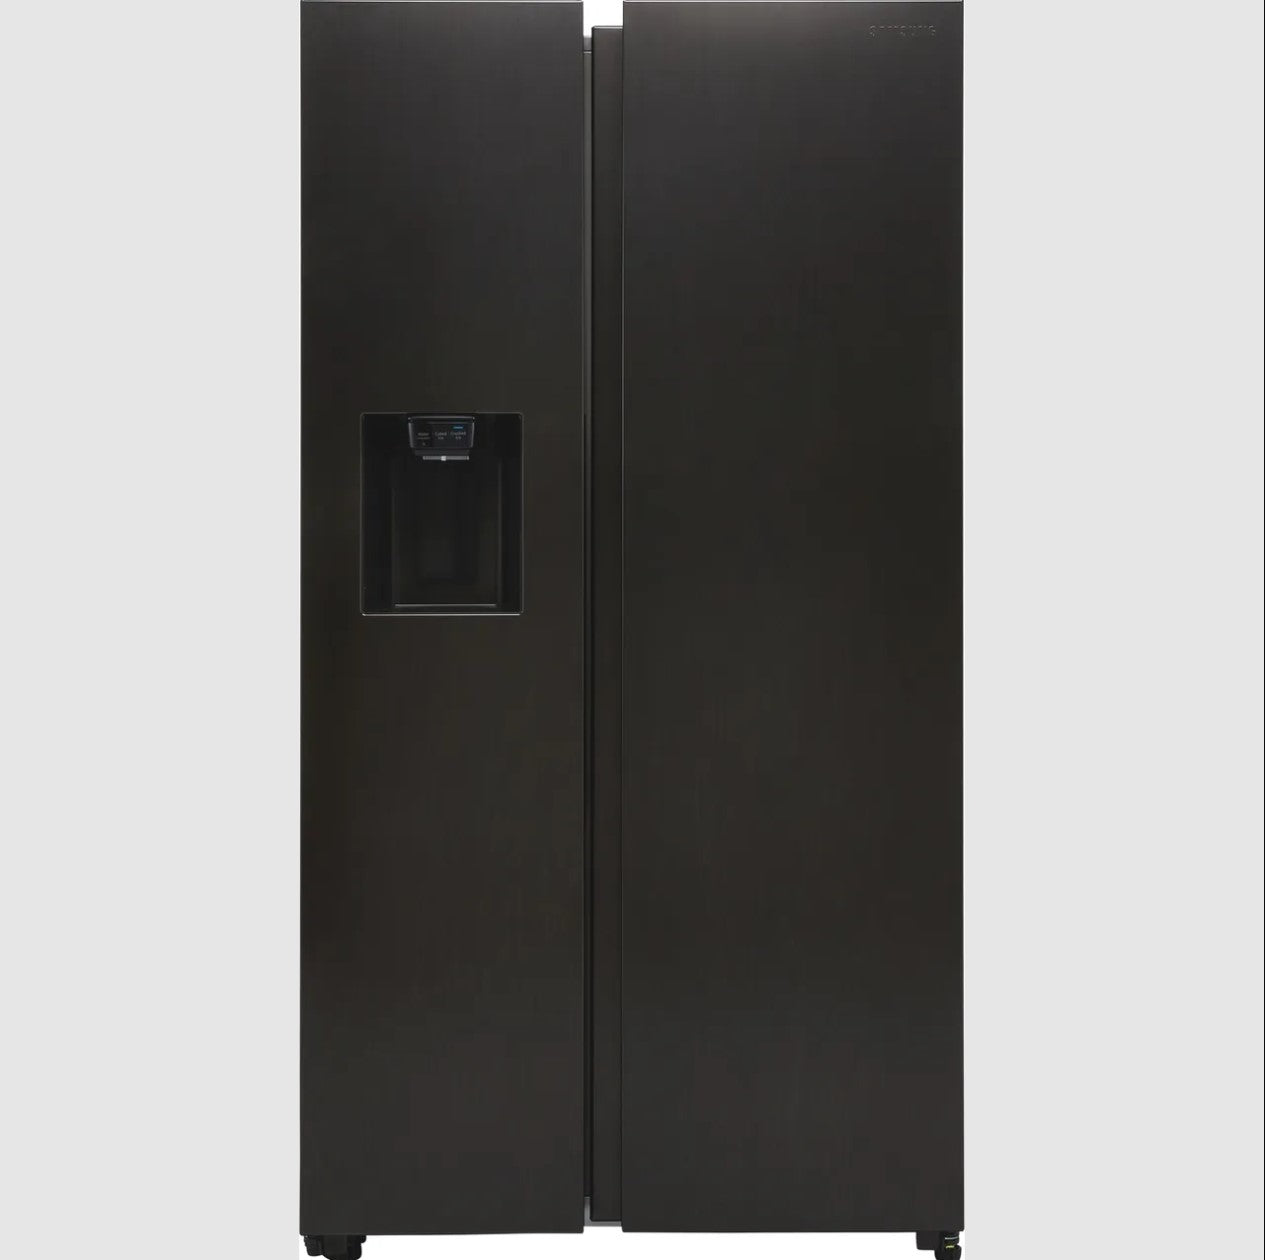 Samsung RS68A8830B1 Fridge Freezer American in Black Steel GRADE B